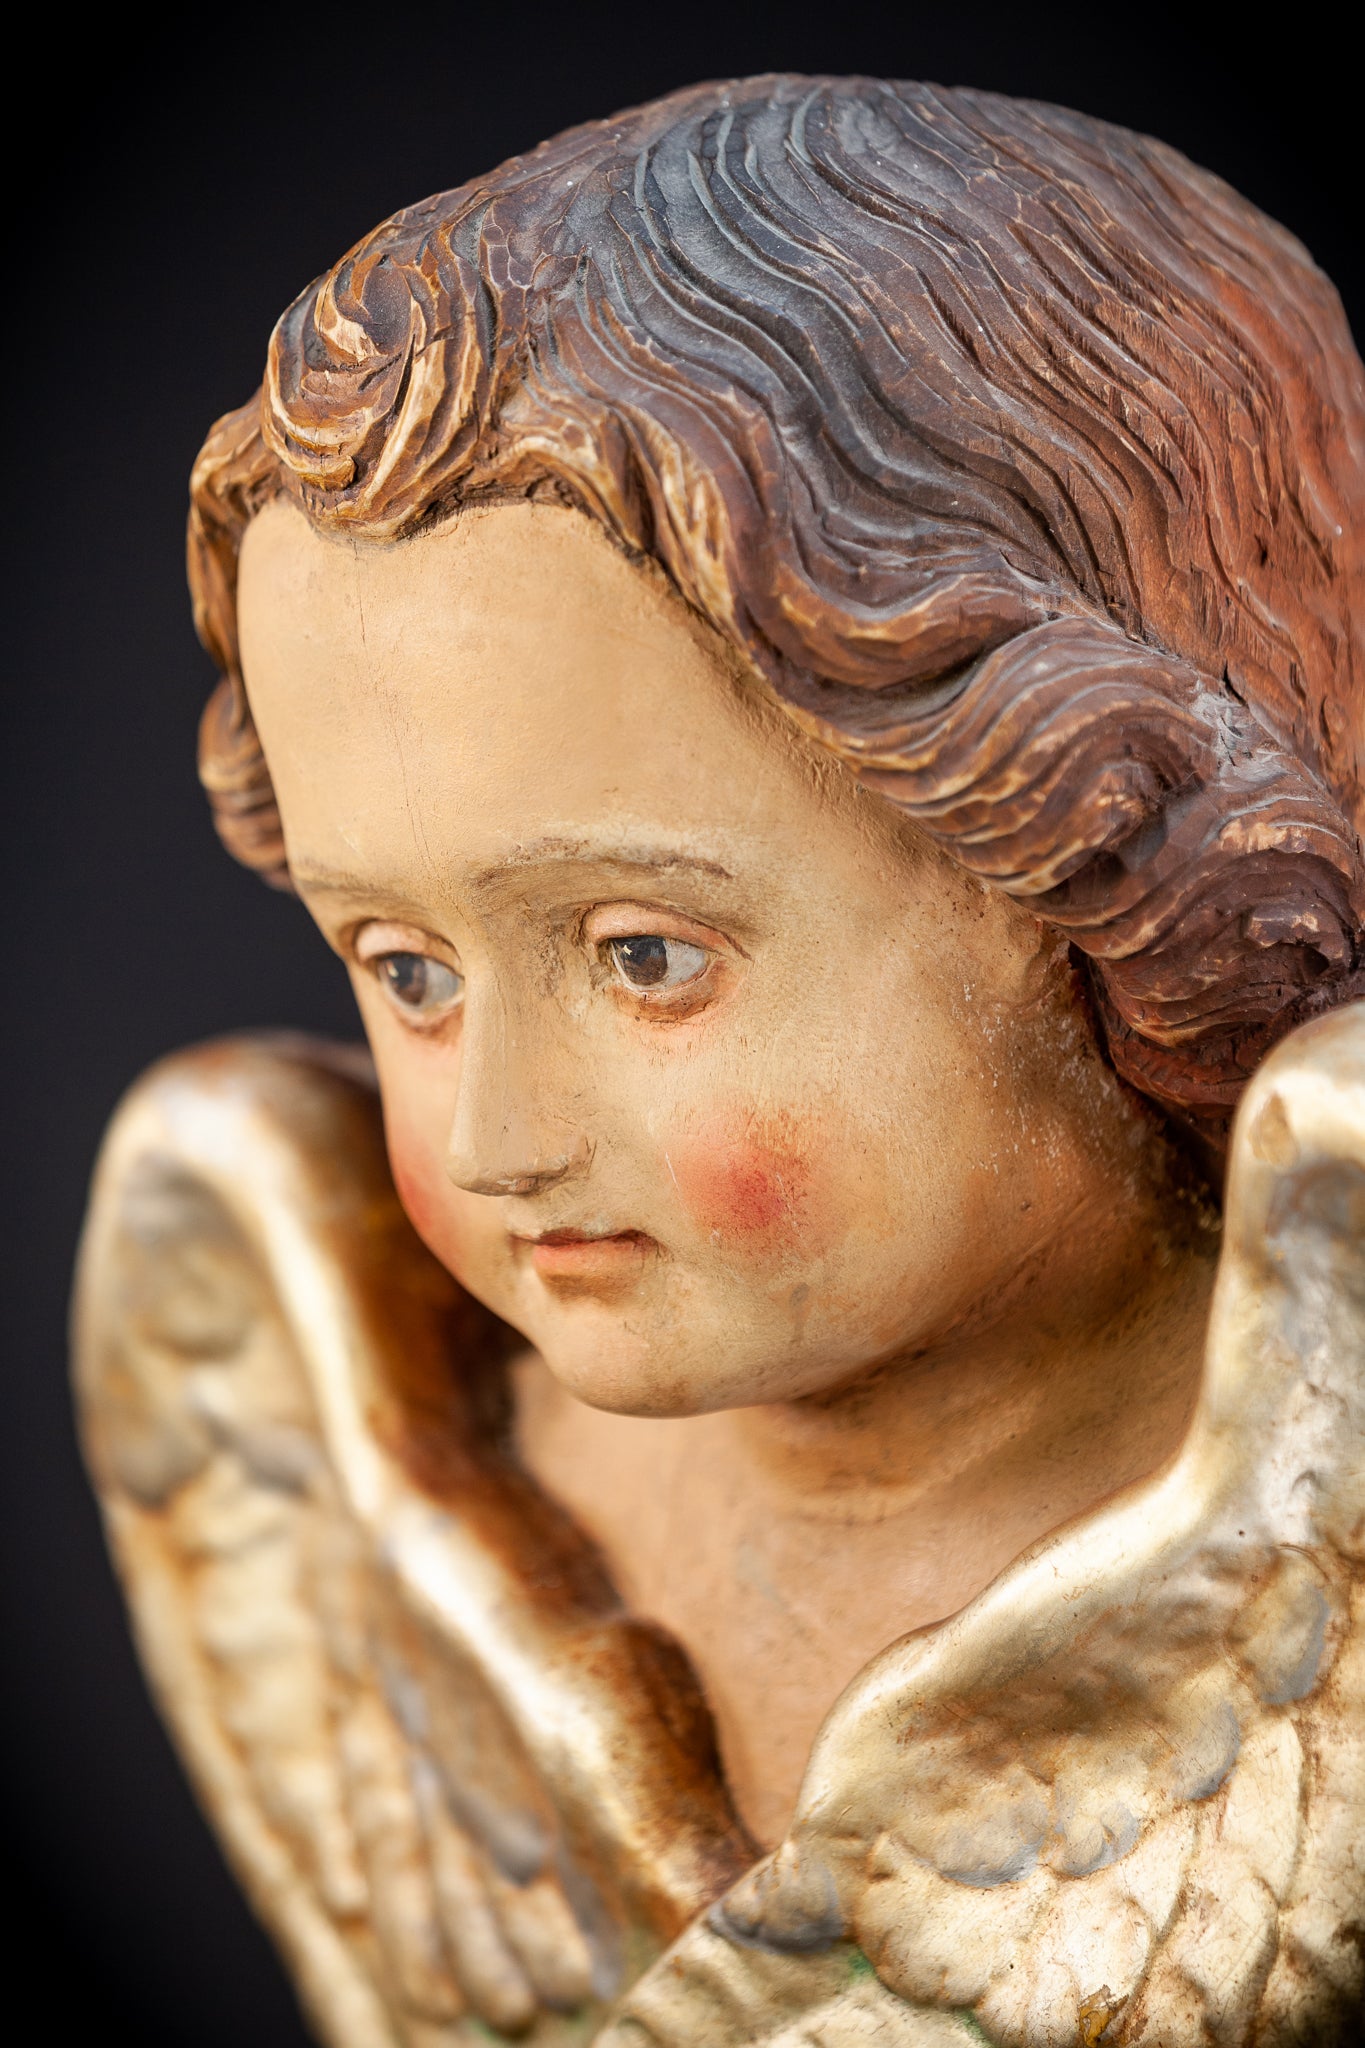 Angel Wood Carving | 1800s Antique | 17.7" / 45 cm